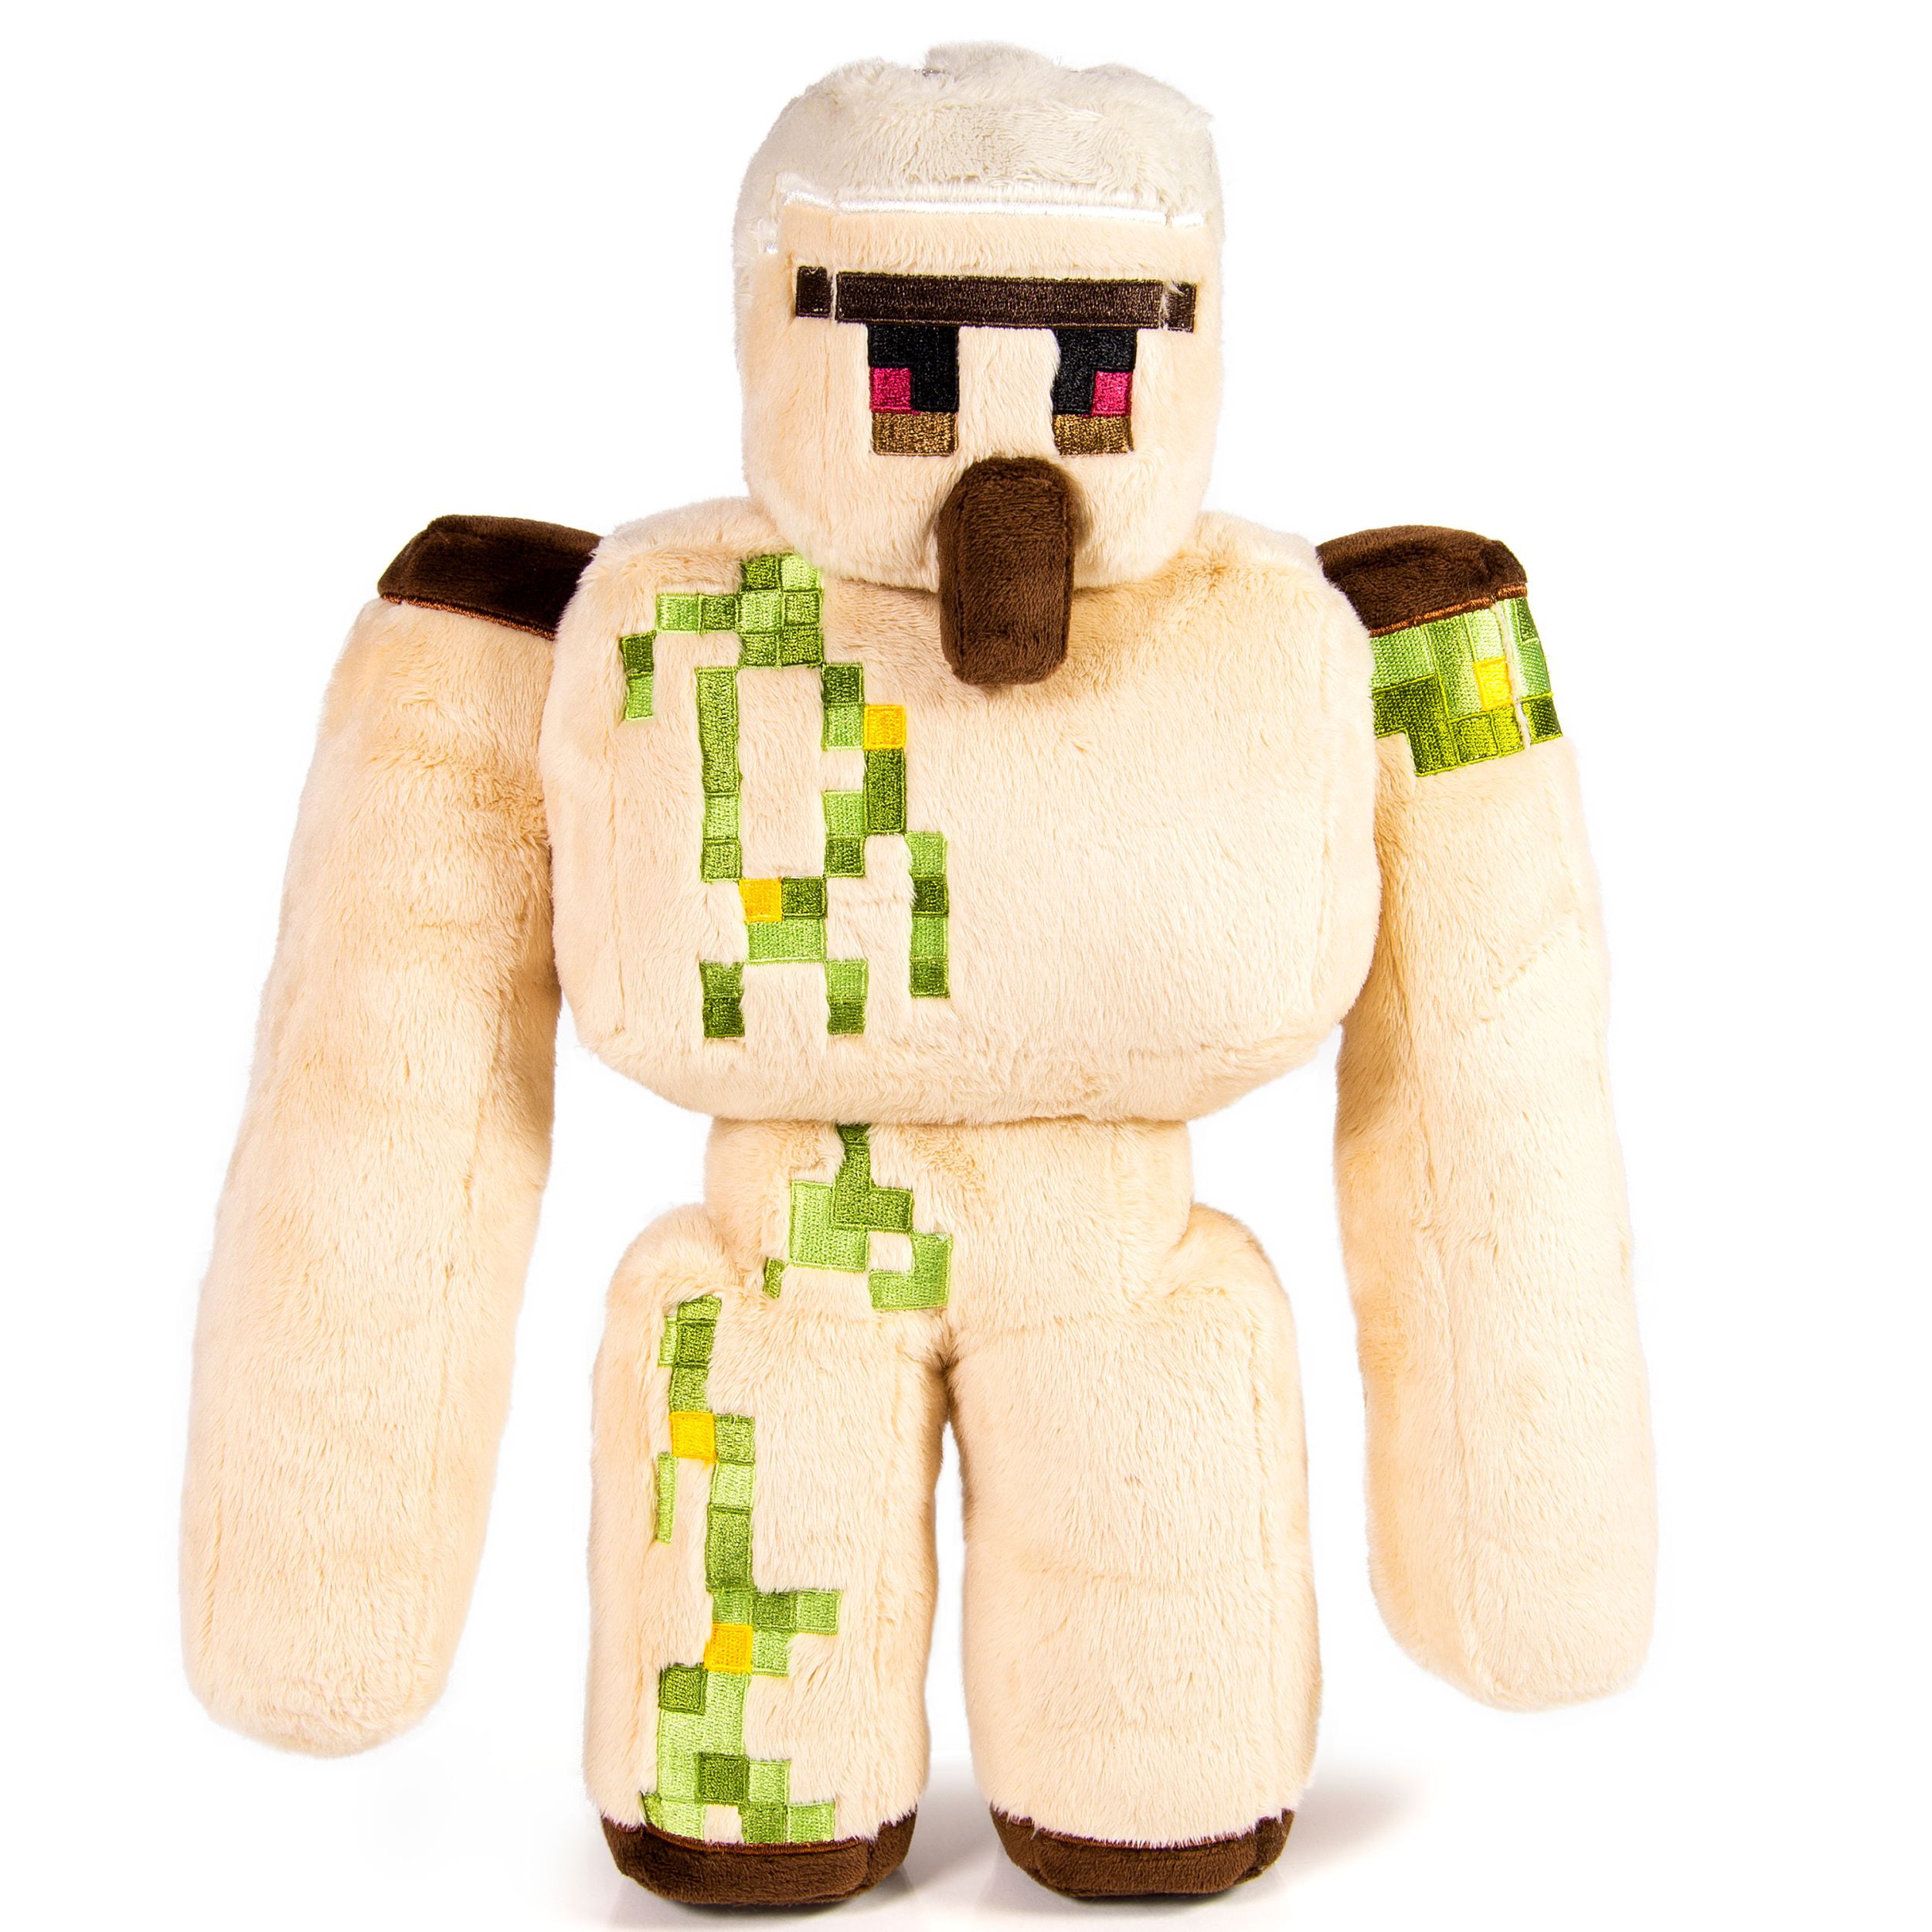 minecraft villager stuffed animal